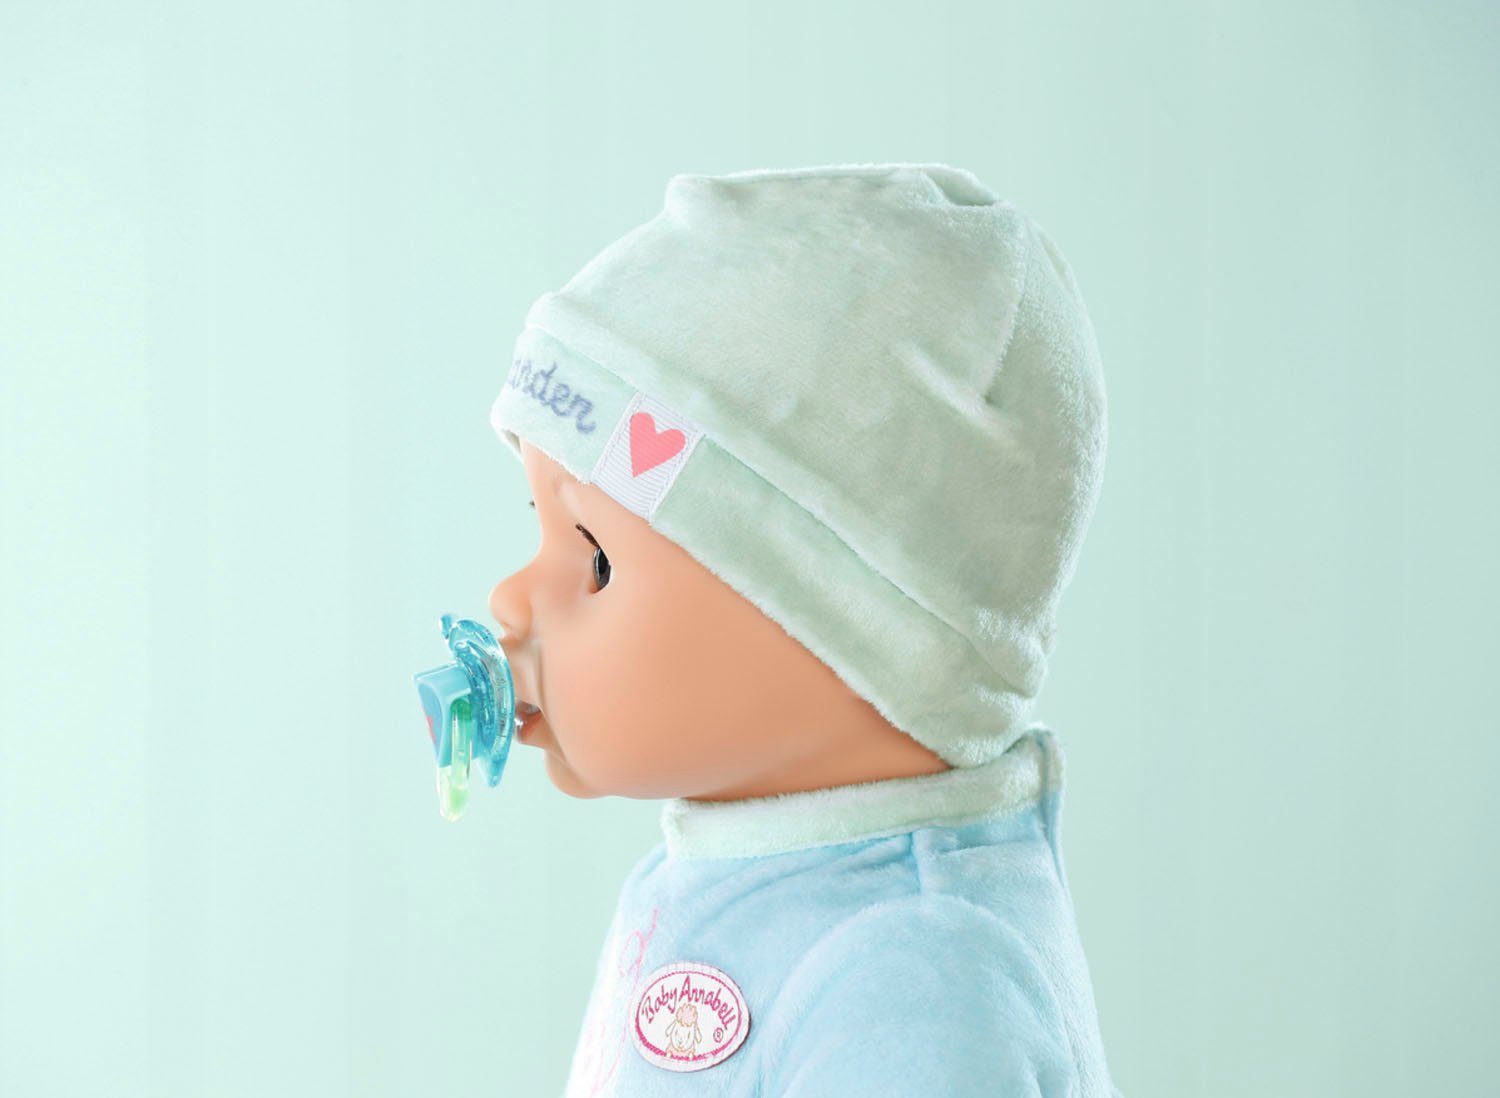 Interactive Baby Alexander Annabell cm Zapf Creation® 43 Babypuppe